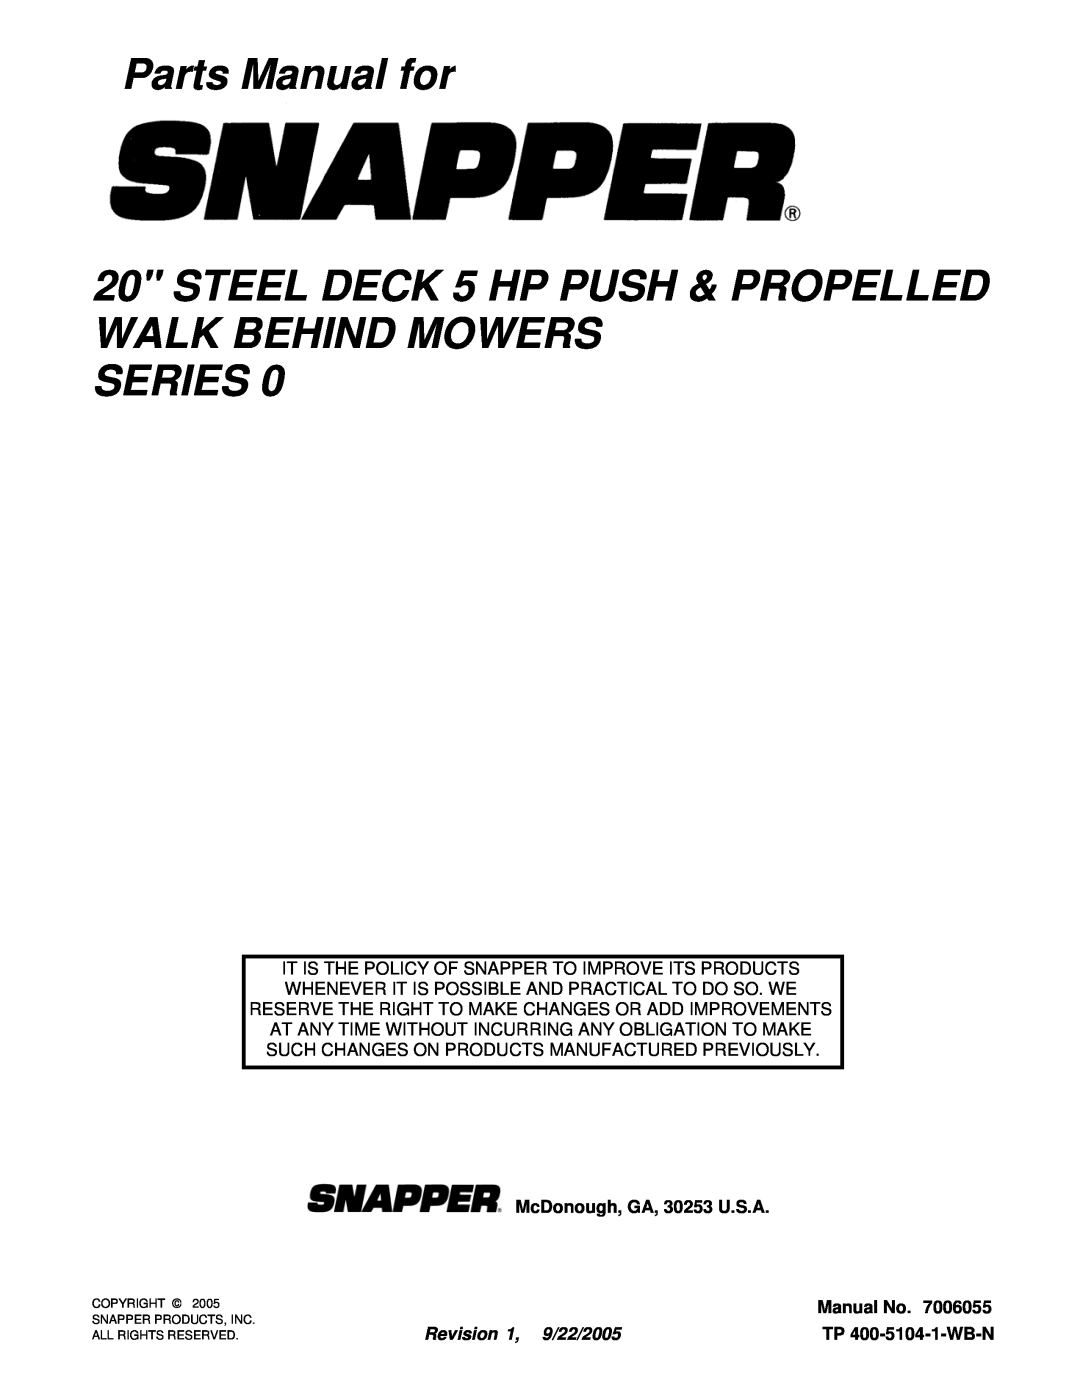 Snapper NR20500 Parts Manual for, STEEL DECK 5 HP PUSH & PROPELLED WALK BEHIND MOWERS SERIES, McDonough, GA, 30253 U.S.A 